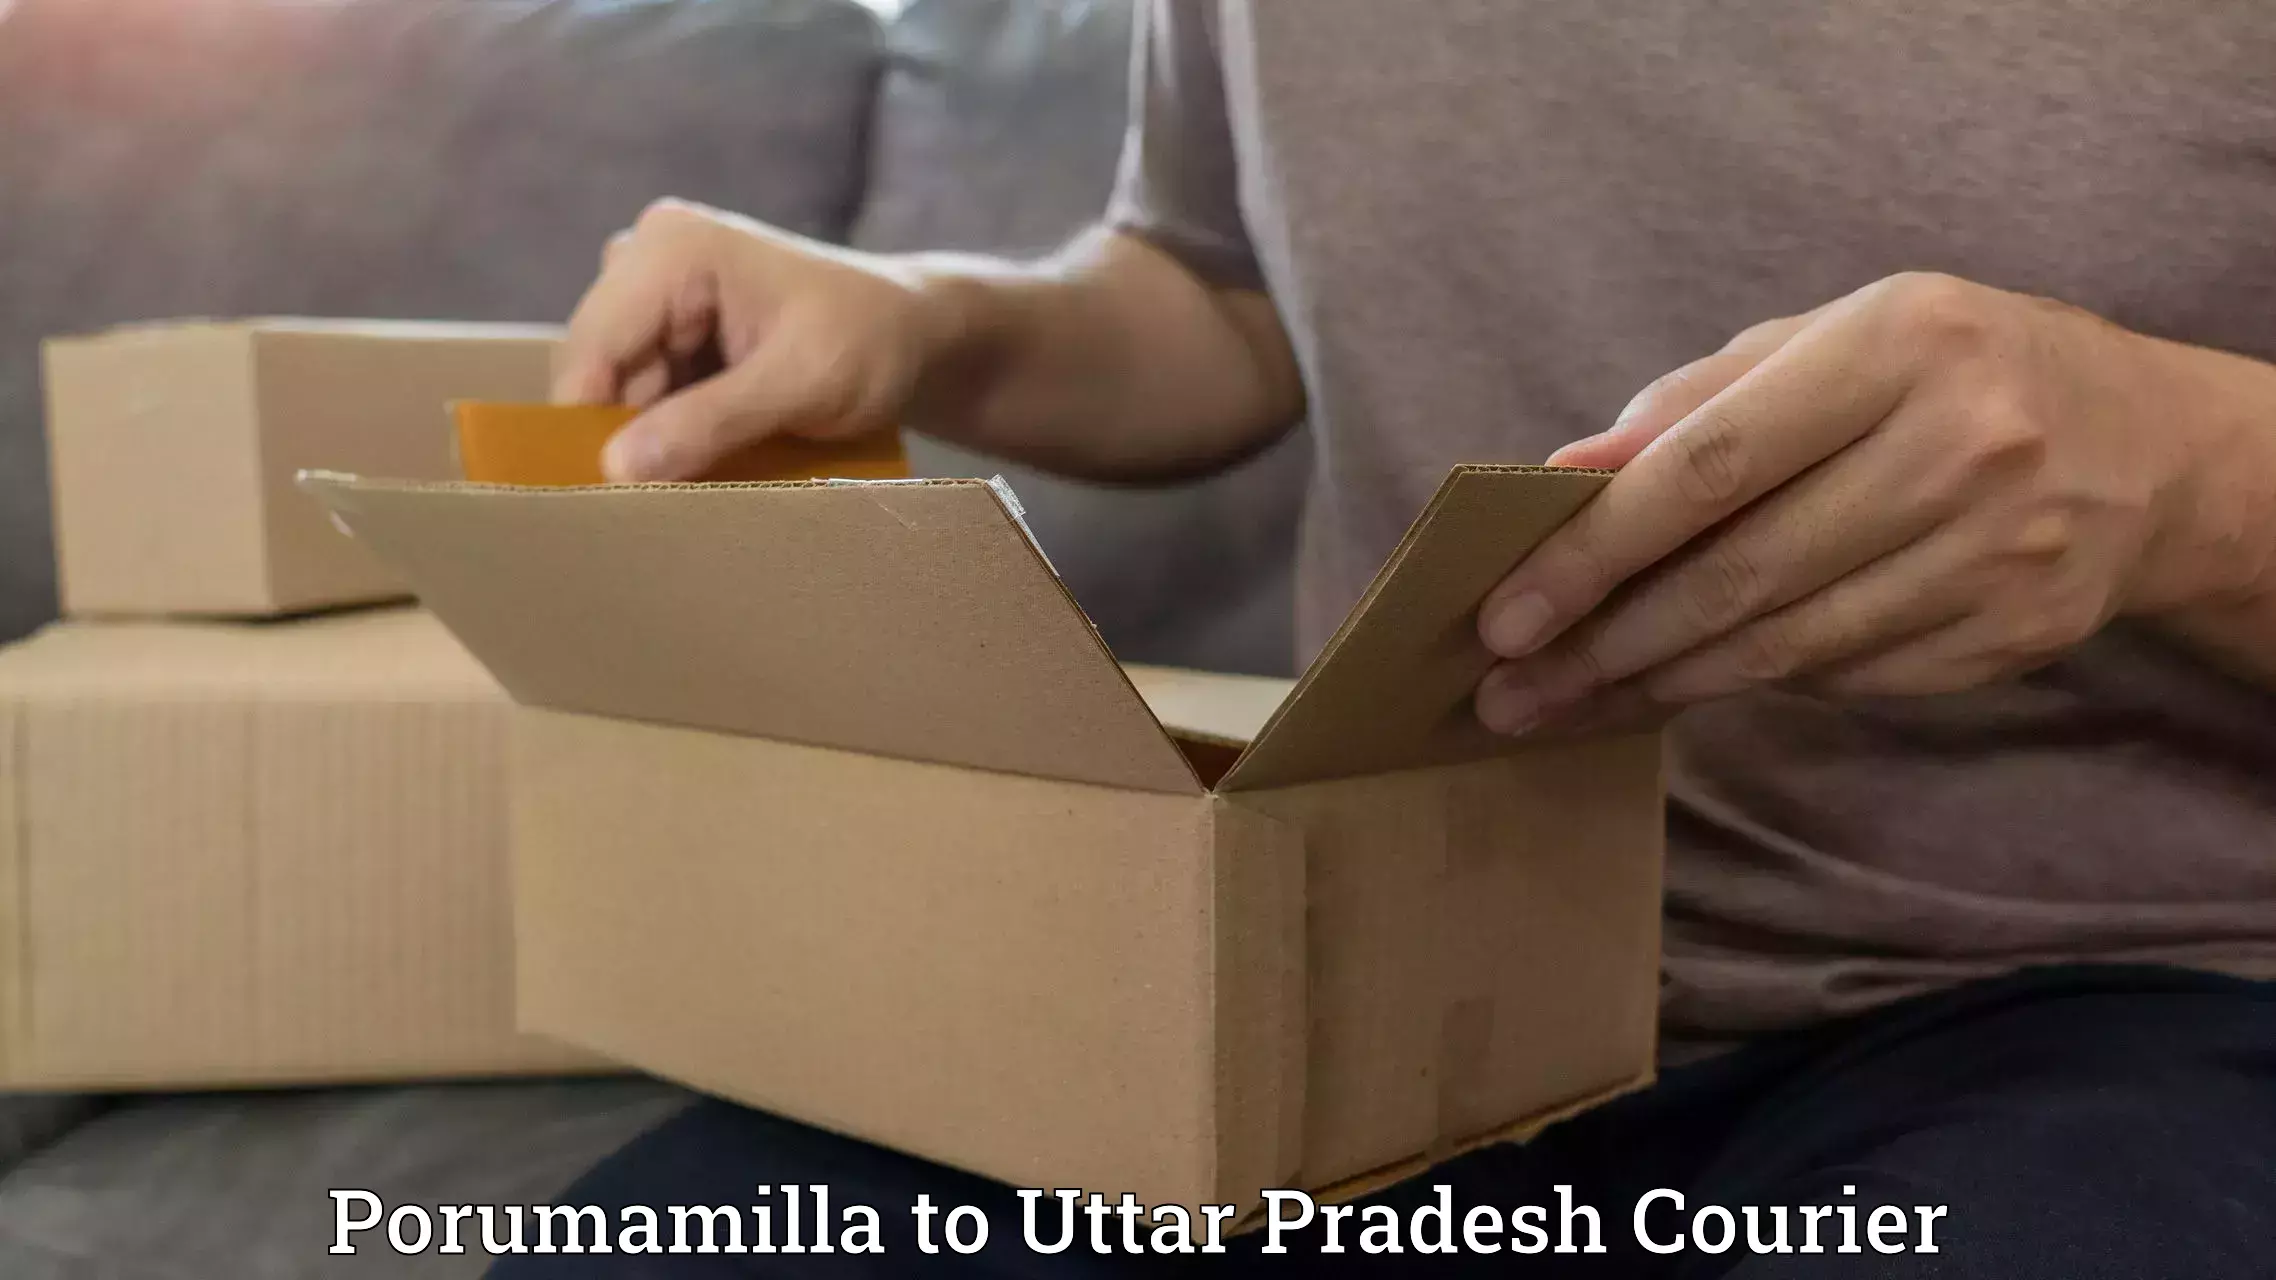 Express package delivery in Porumamilla to Aligarh Muslim University